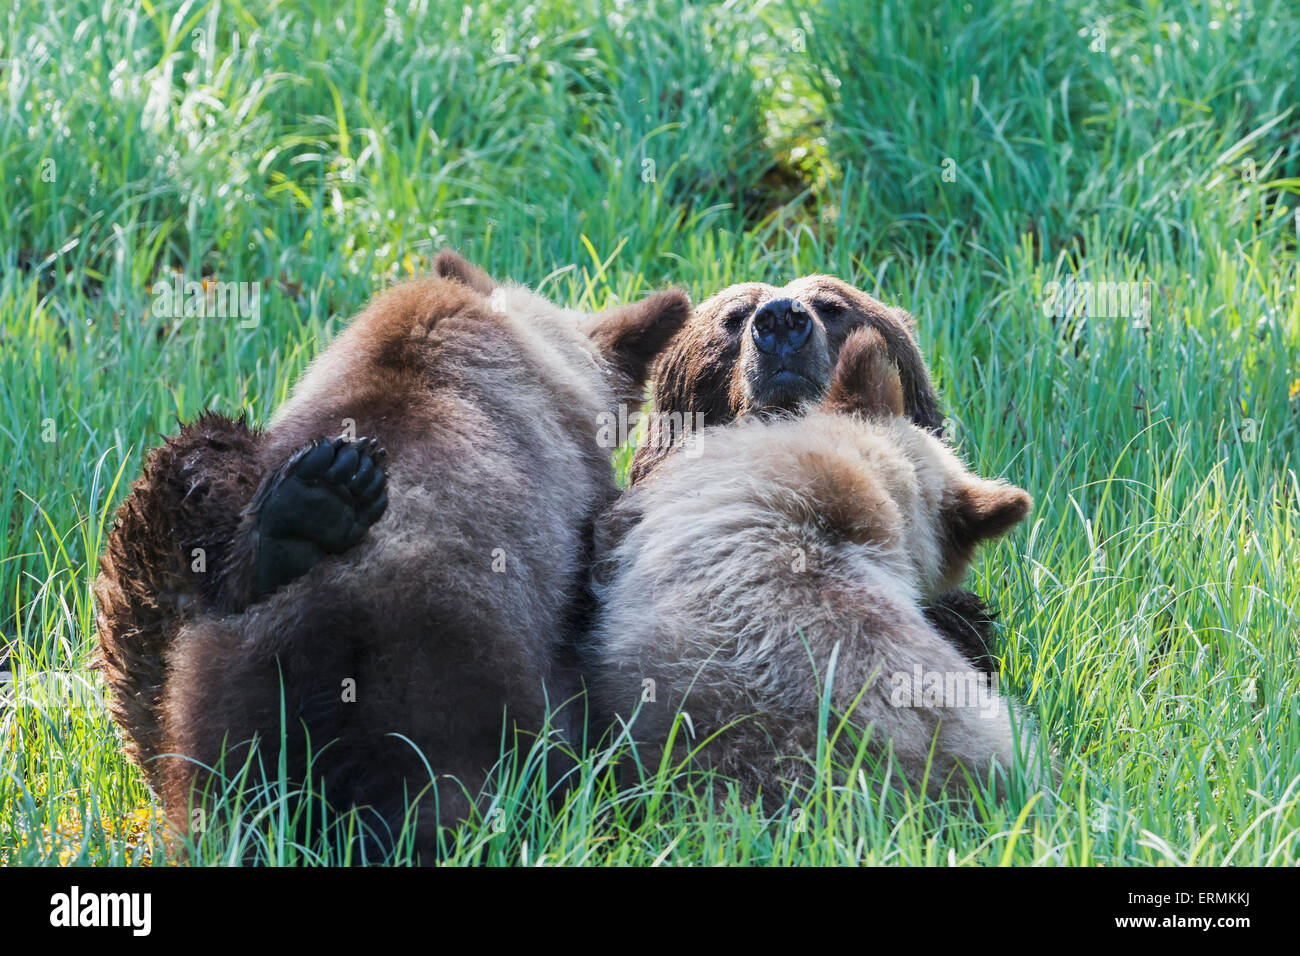 Grizzly bear (Ursus horribilus) feeding her cubs in the sedge grass, Khutzymateen Bear Sanctuary; British Columbia, Canada Stock Photo